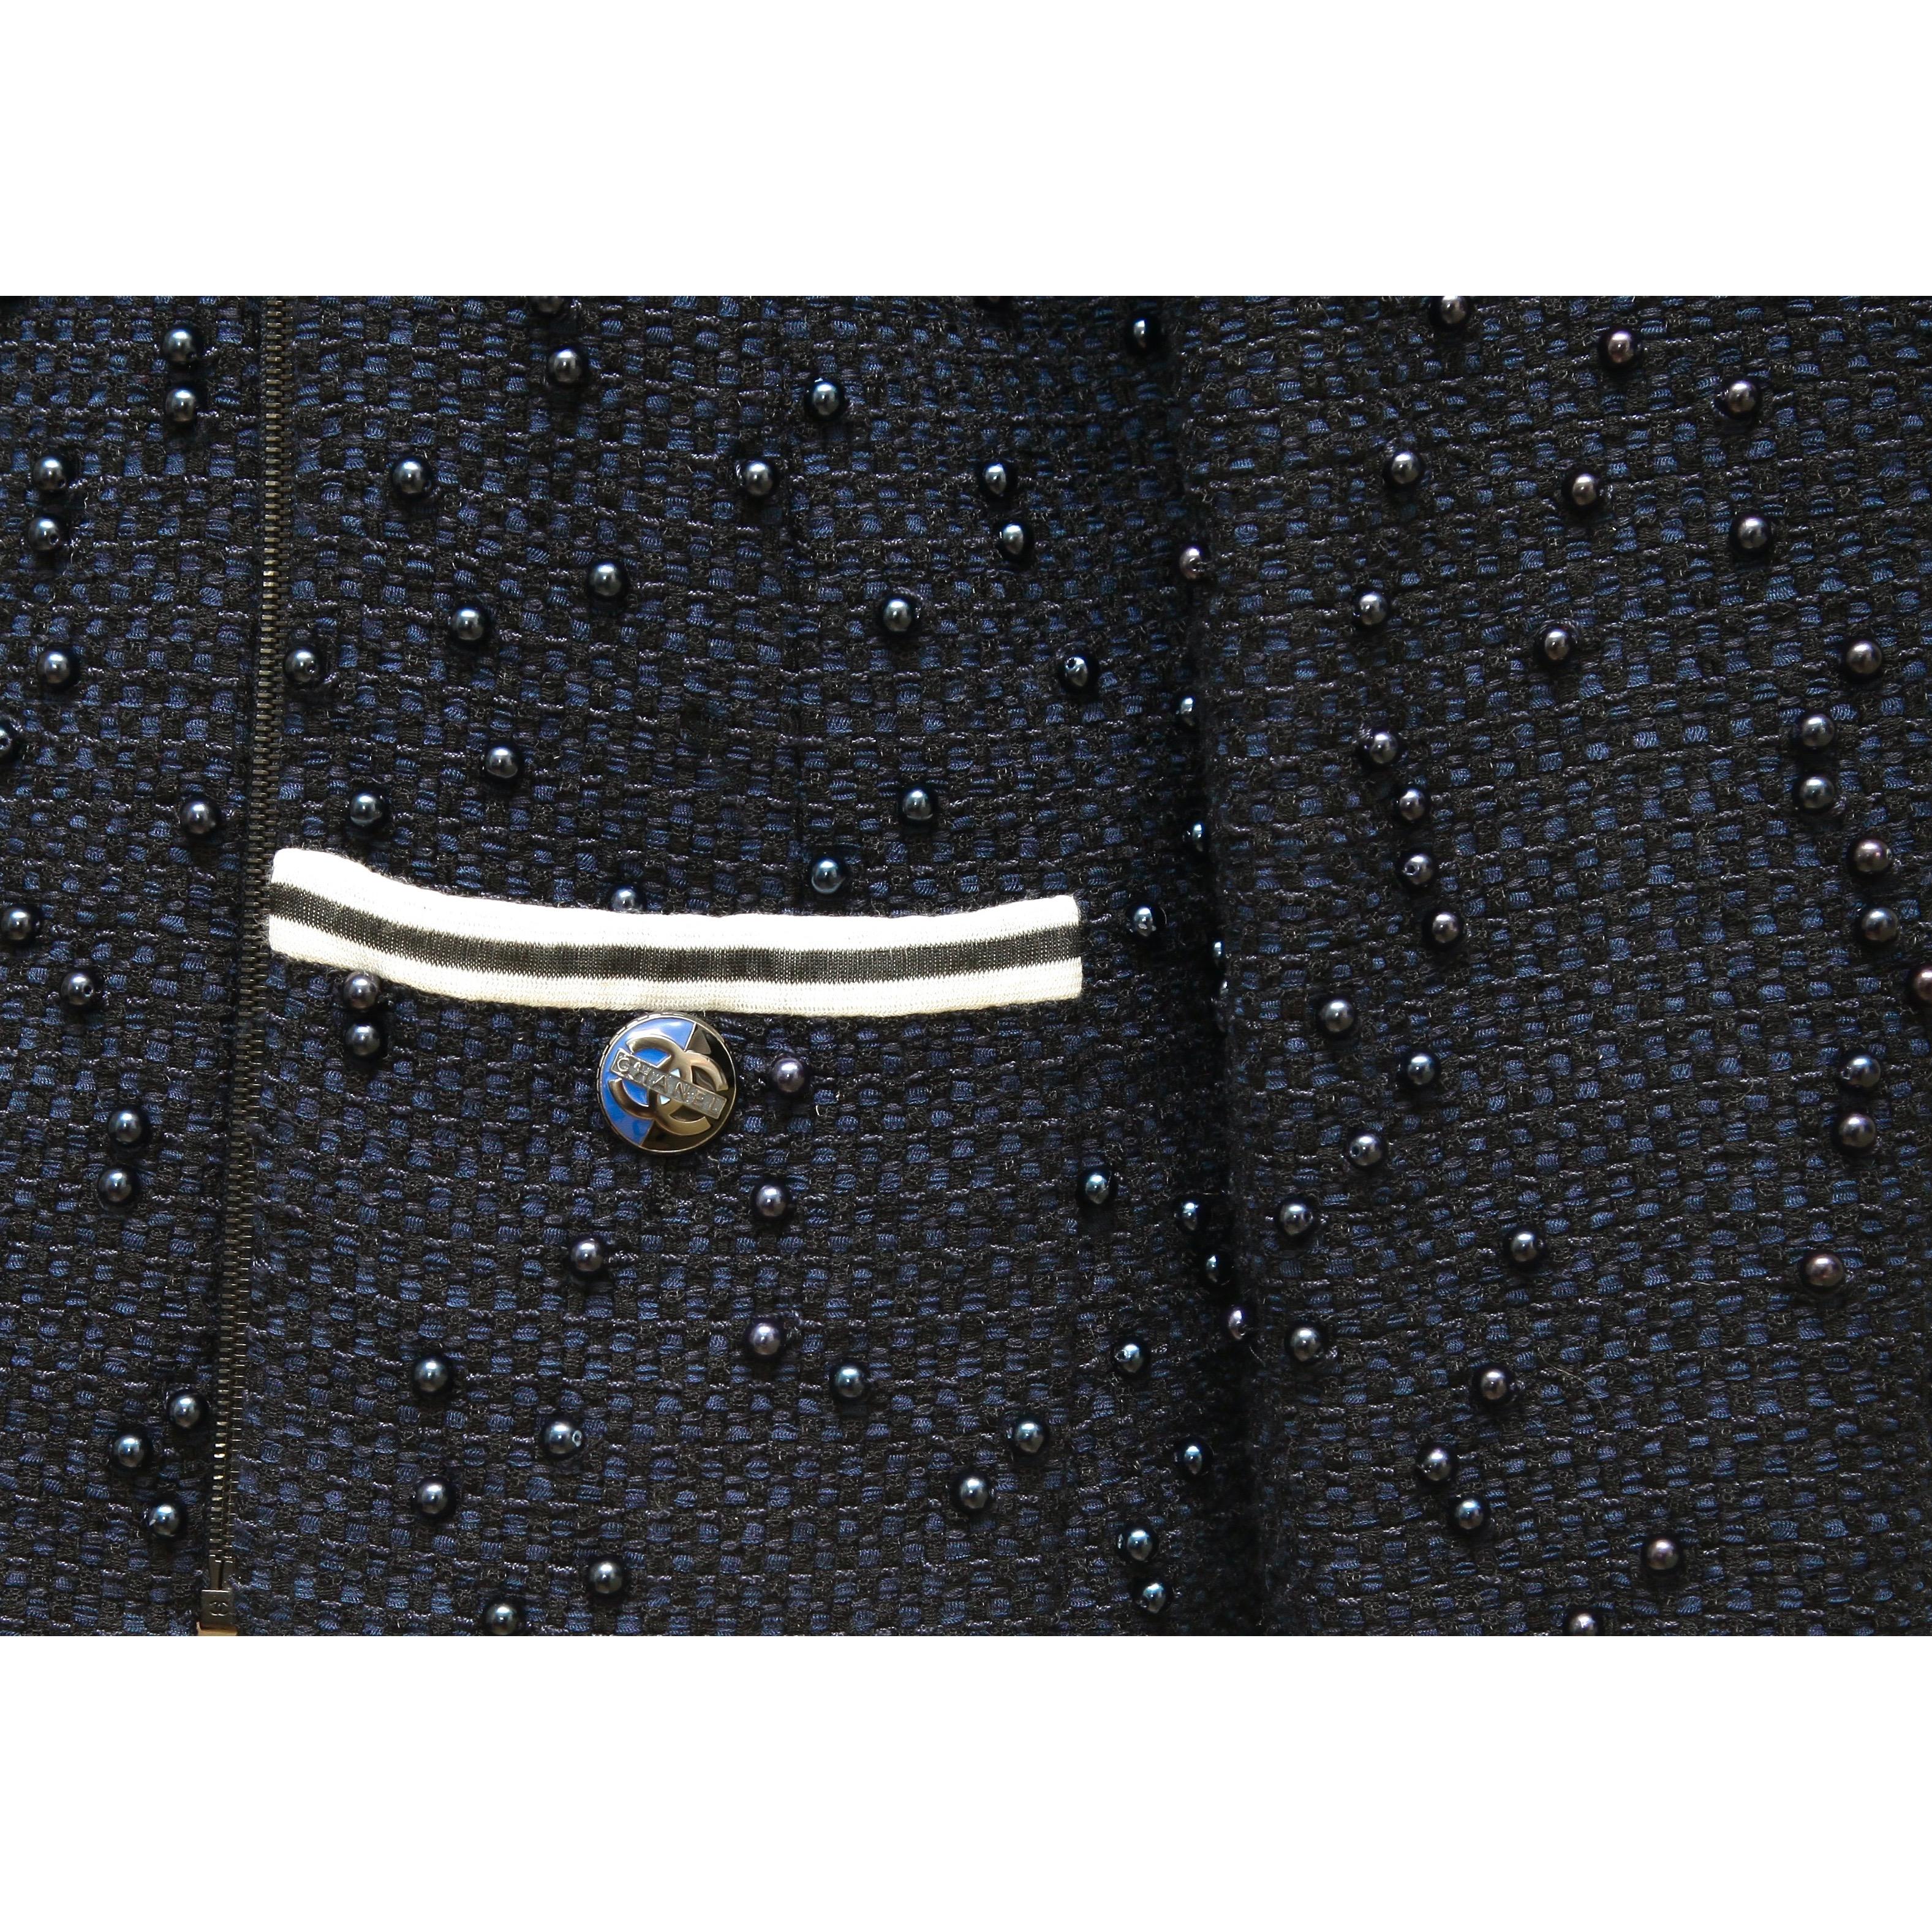 Women's CHANEL Jacket Blazer Coat Tweed Navy Blue Beaded Buttons Zipper 2017 Sz 40 For Sale